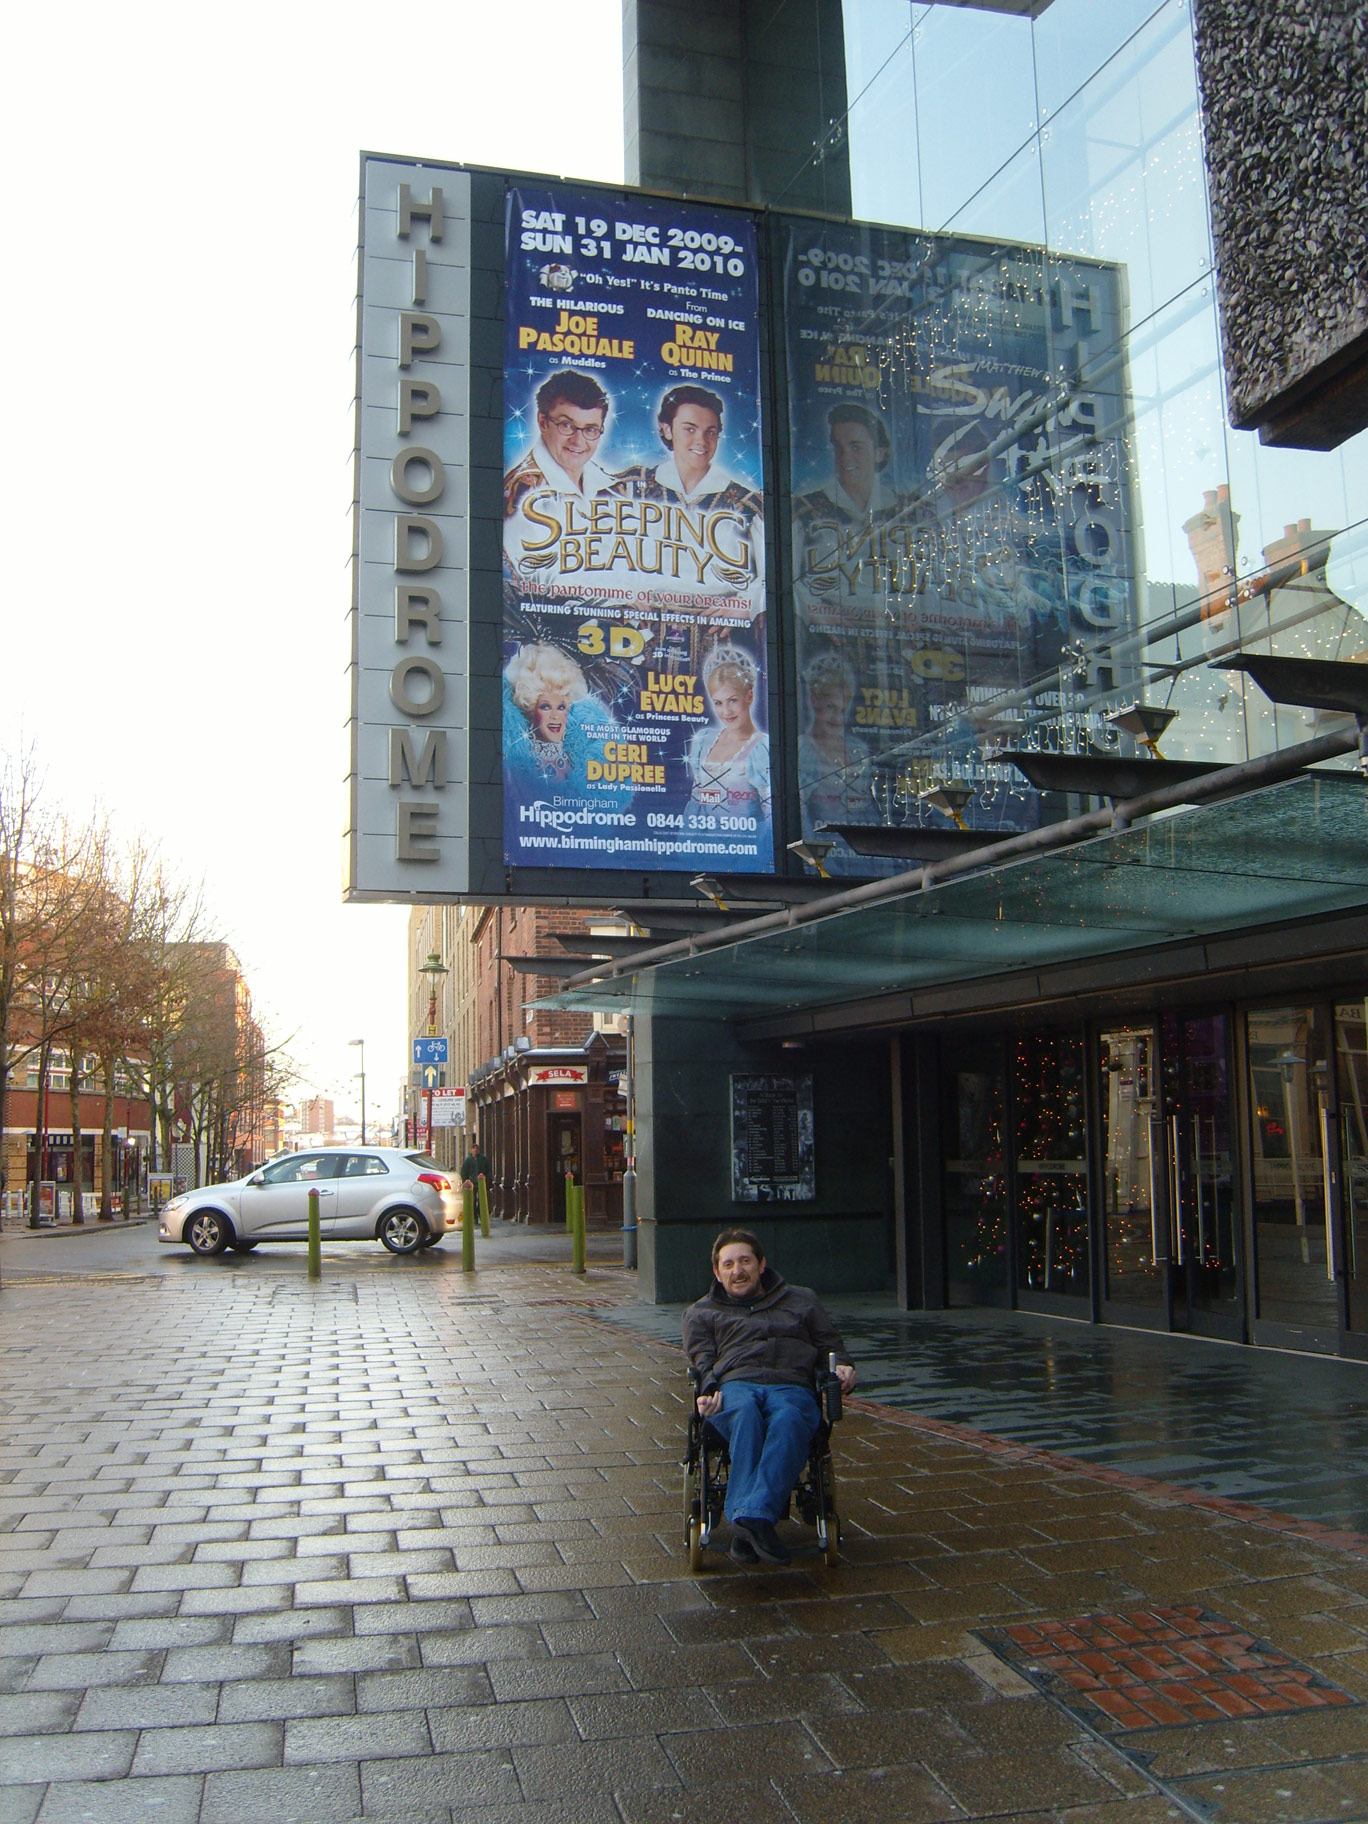 Me Outside Birmingham Hippodrome Theatre